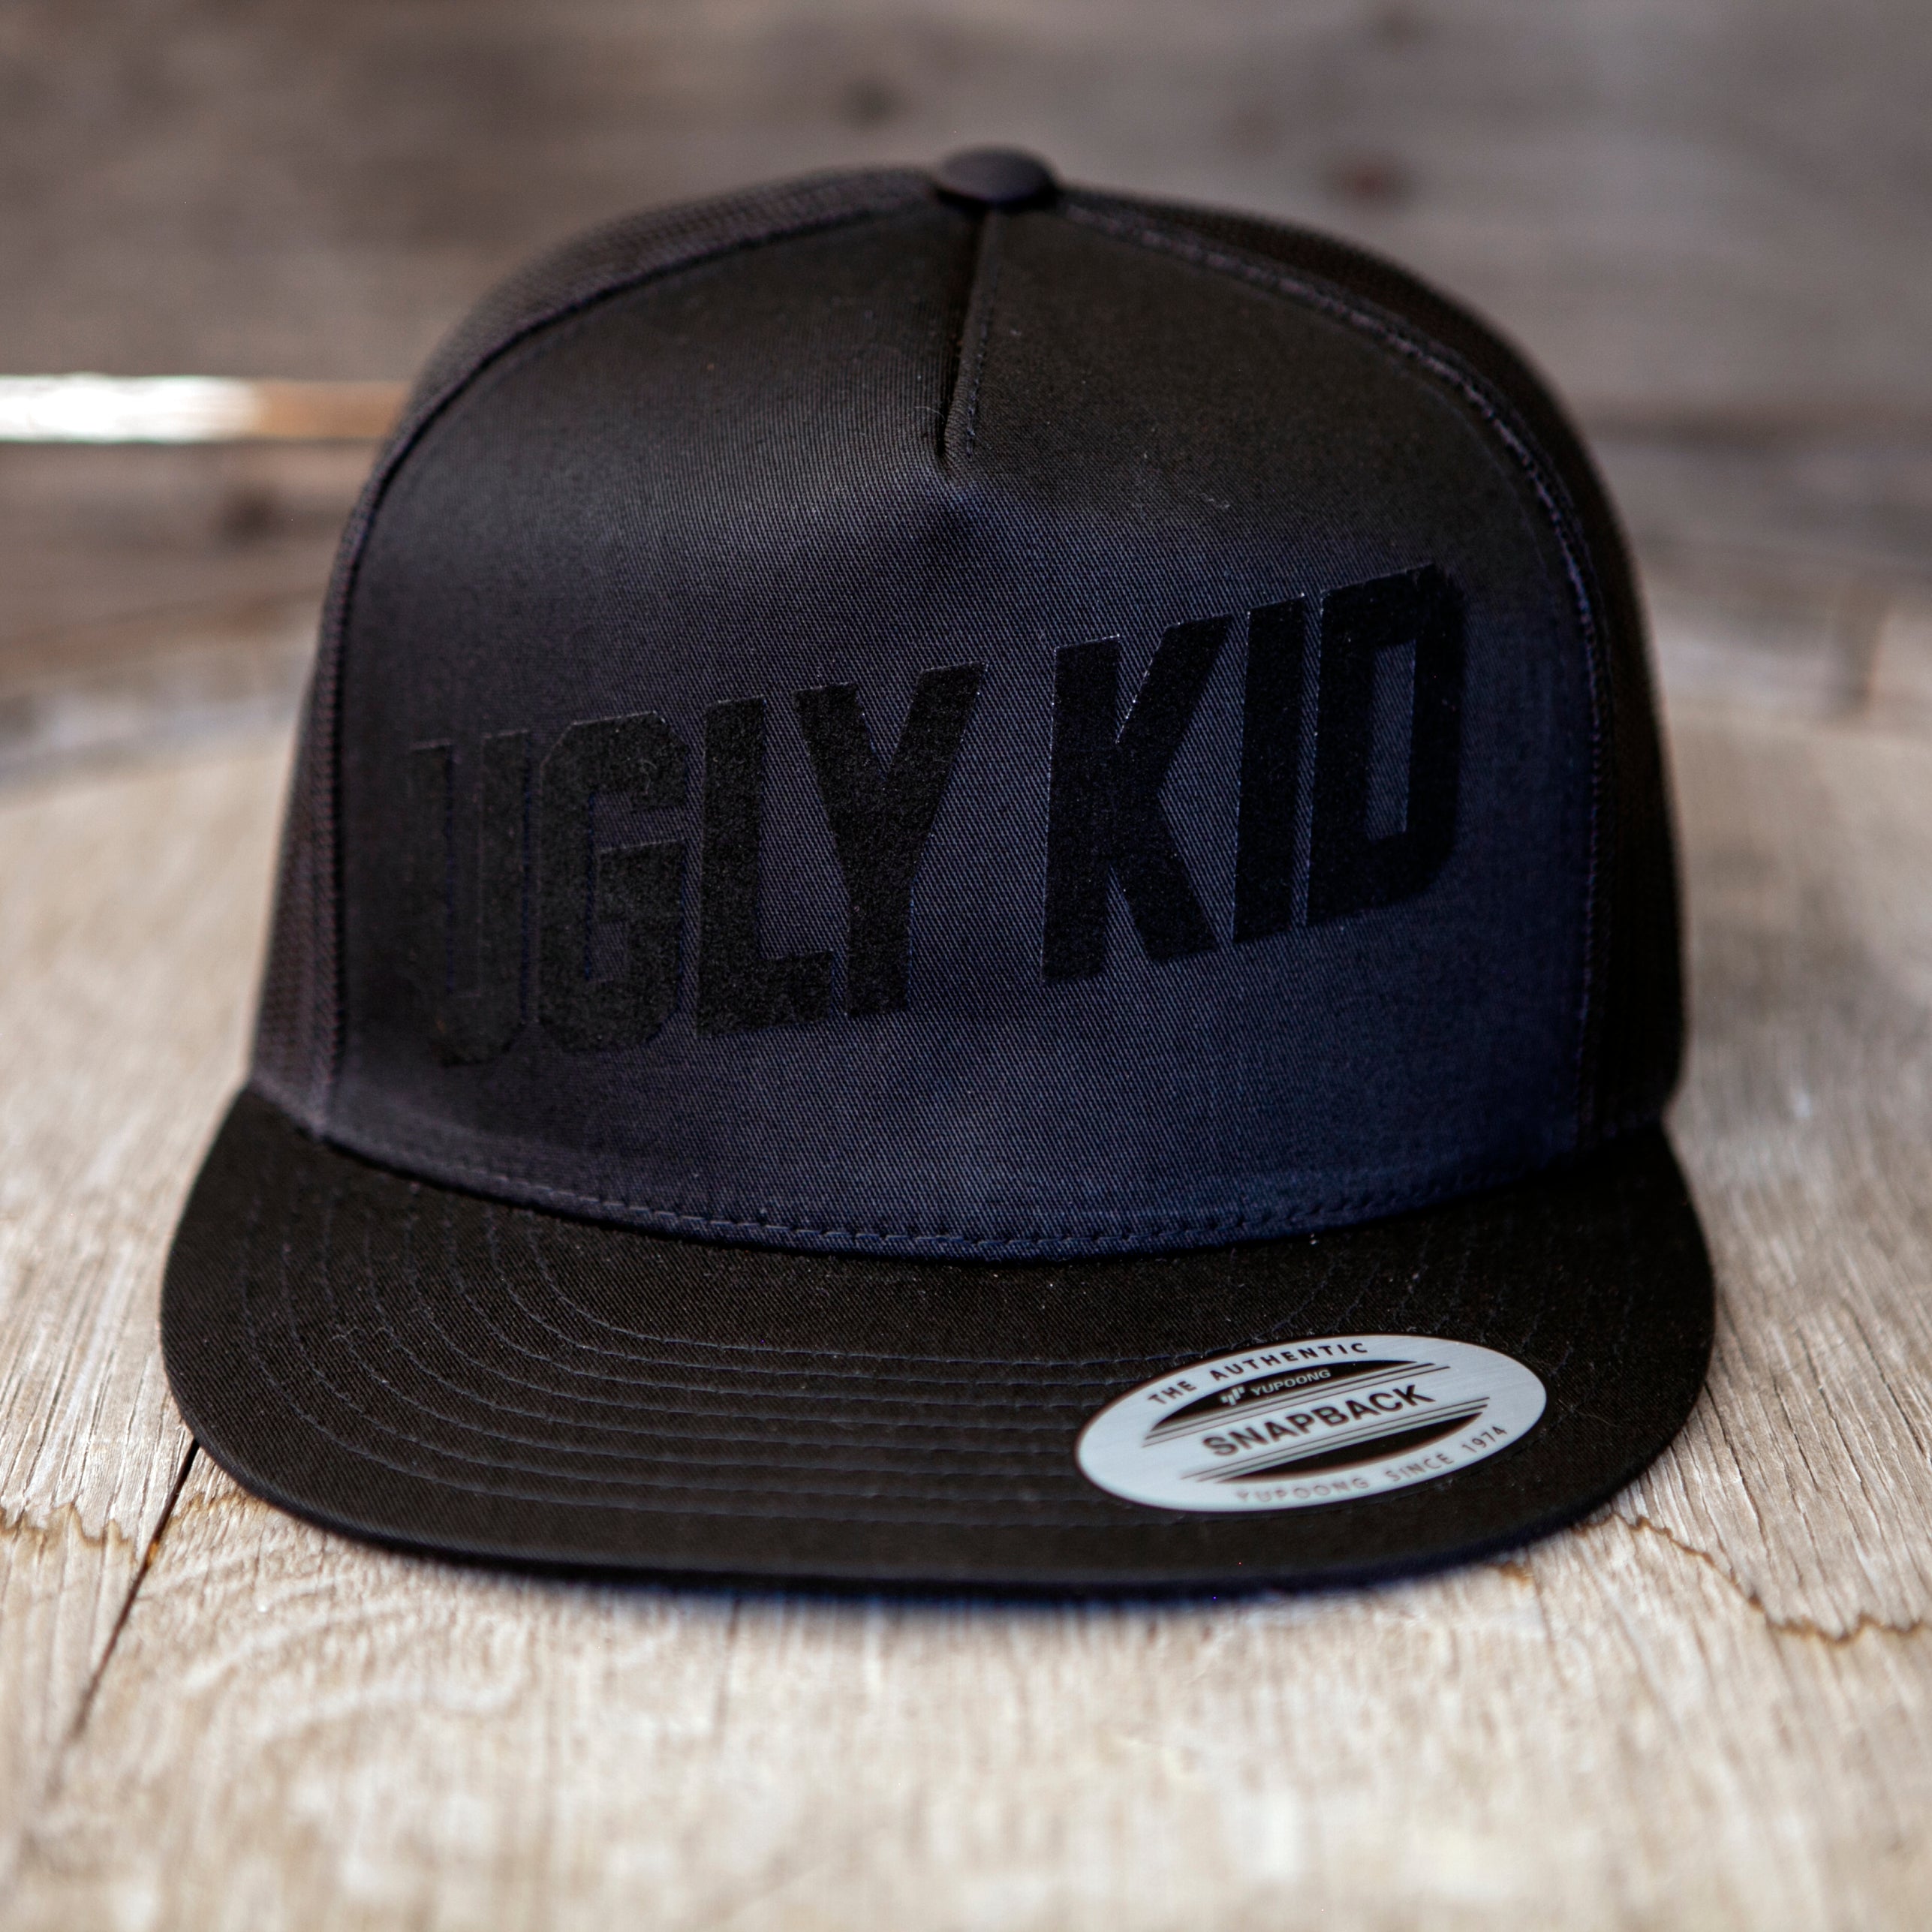 Ugly Kid Hat